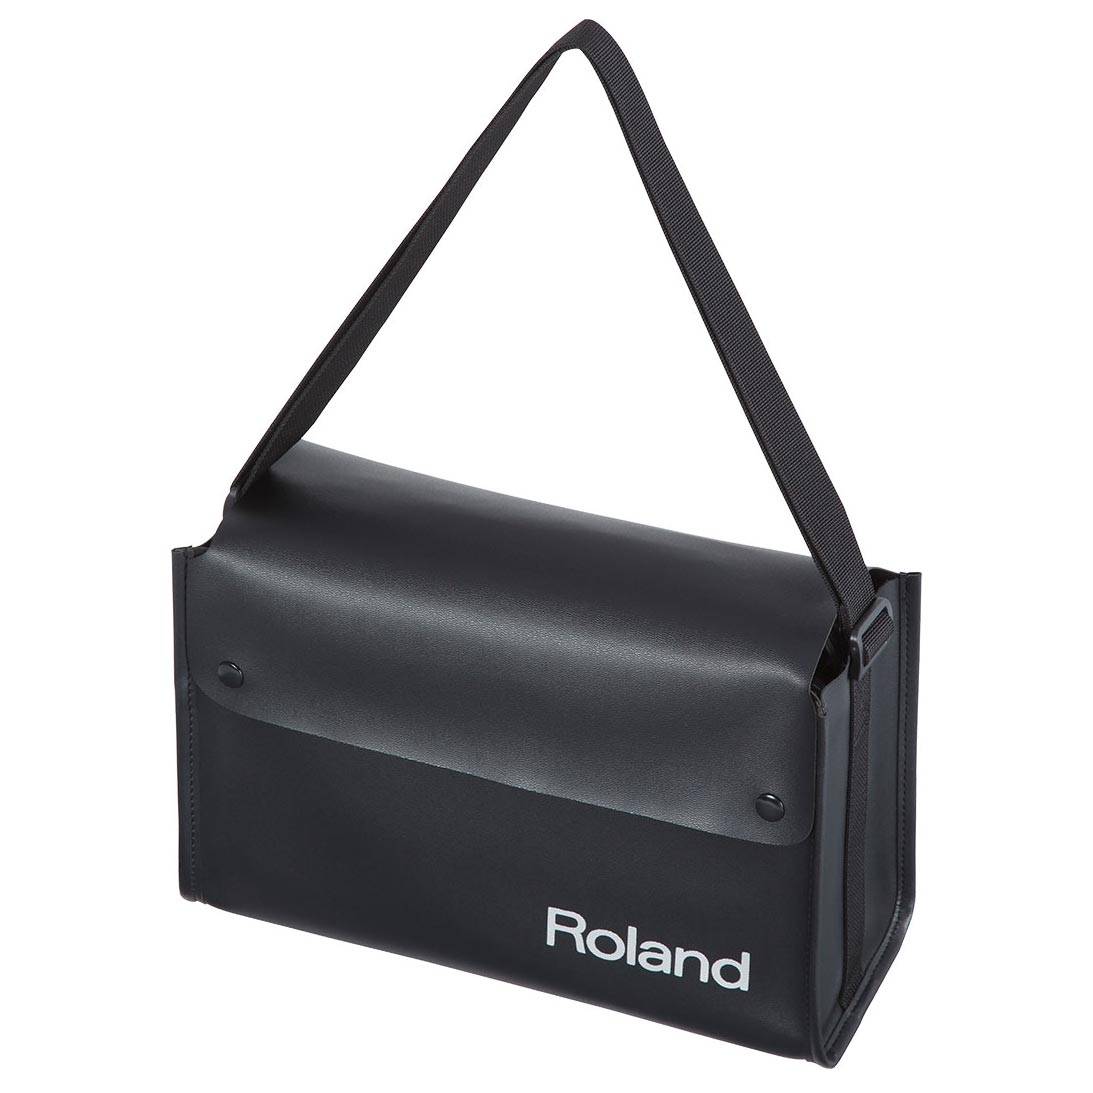 Roland CB-MBC1 for Mobile Cube